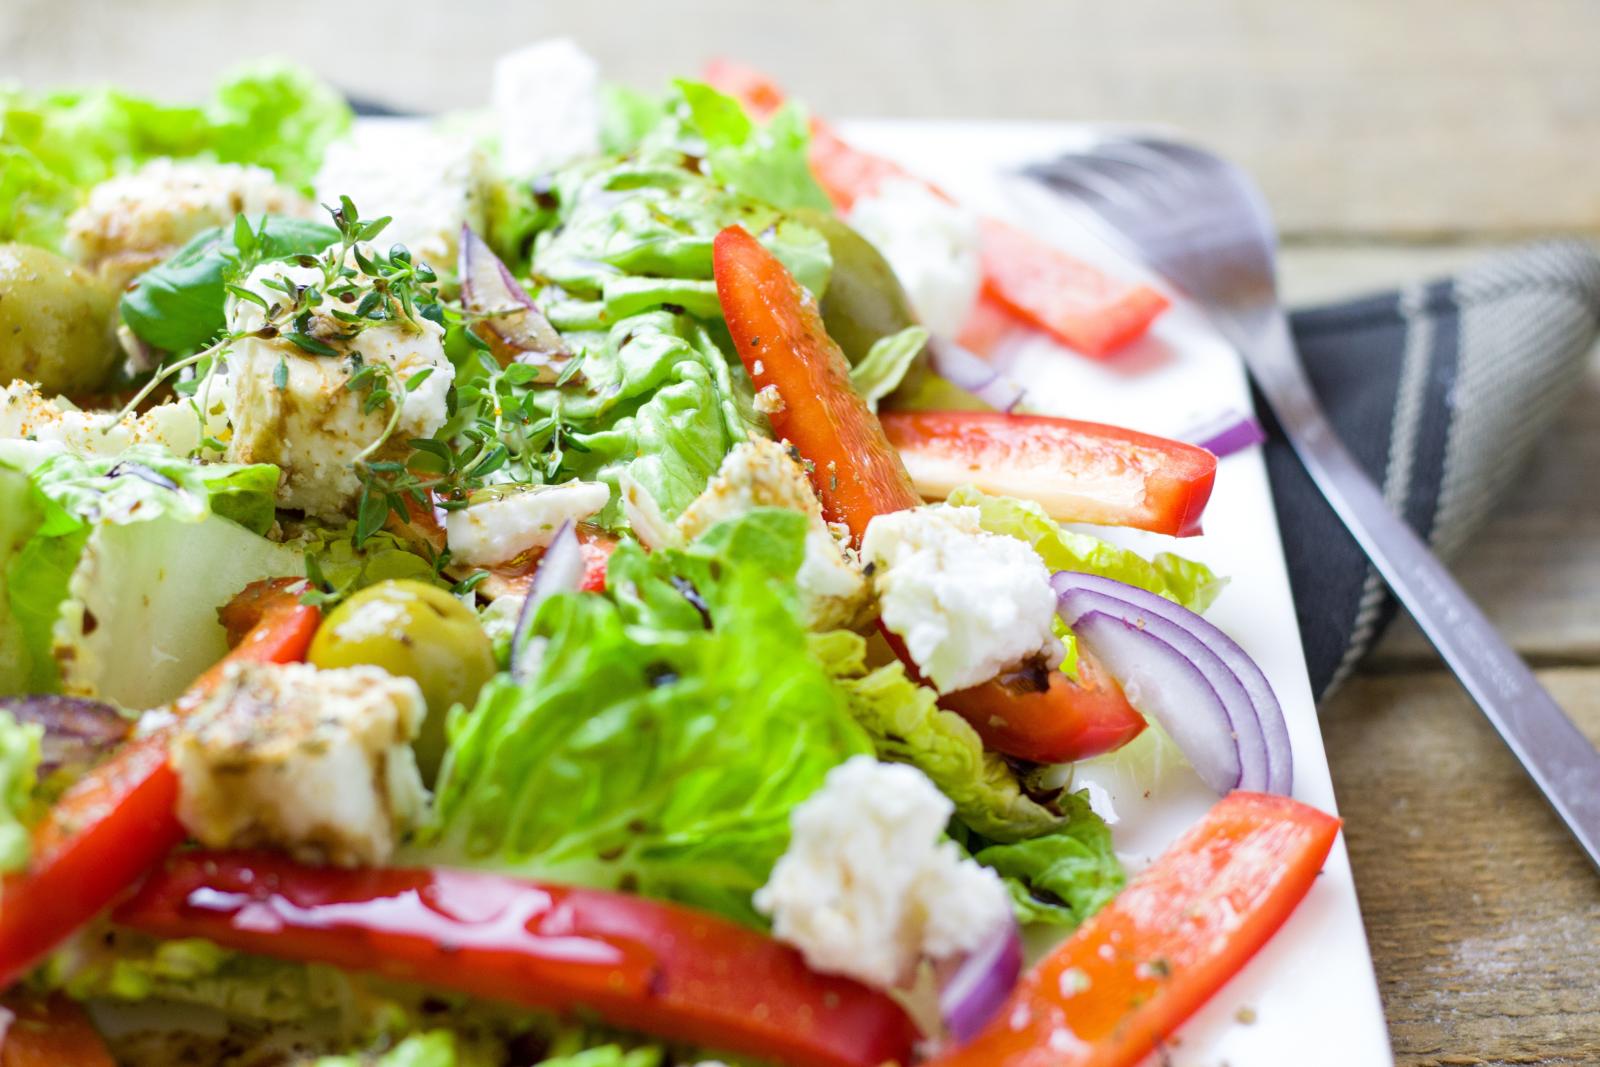 Salad. Photo credit: pixabay